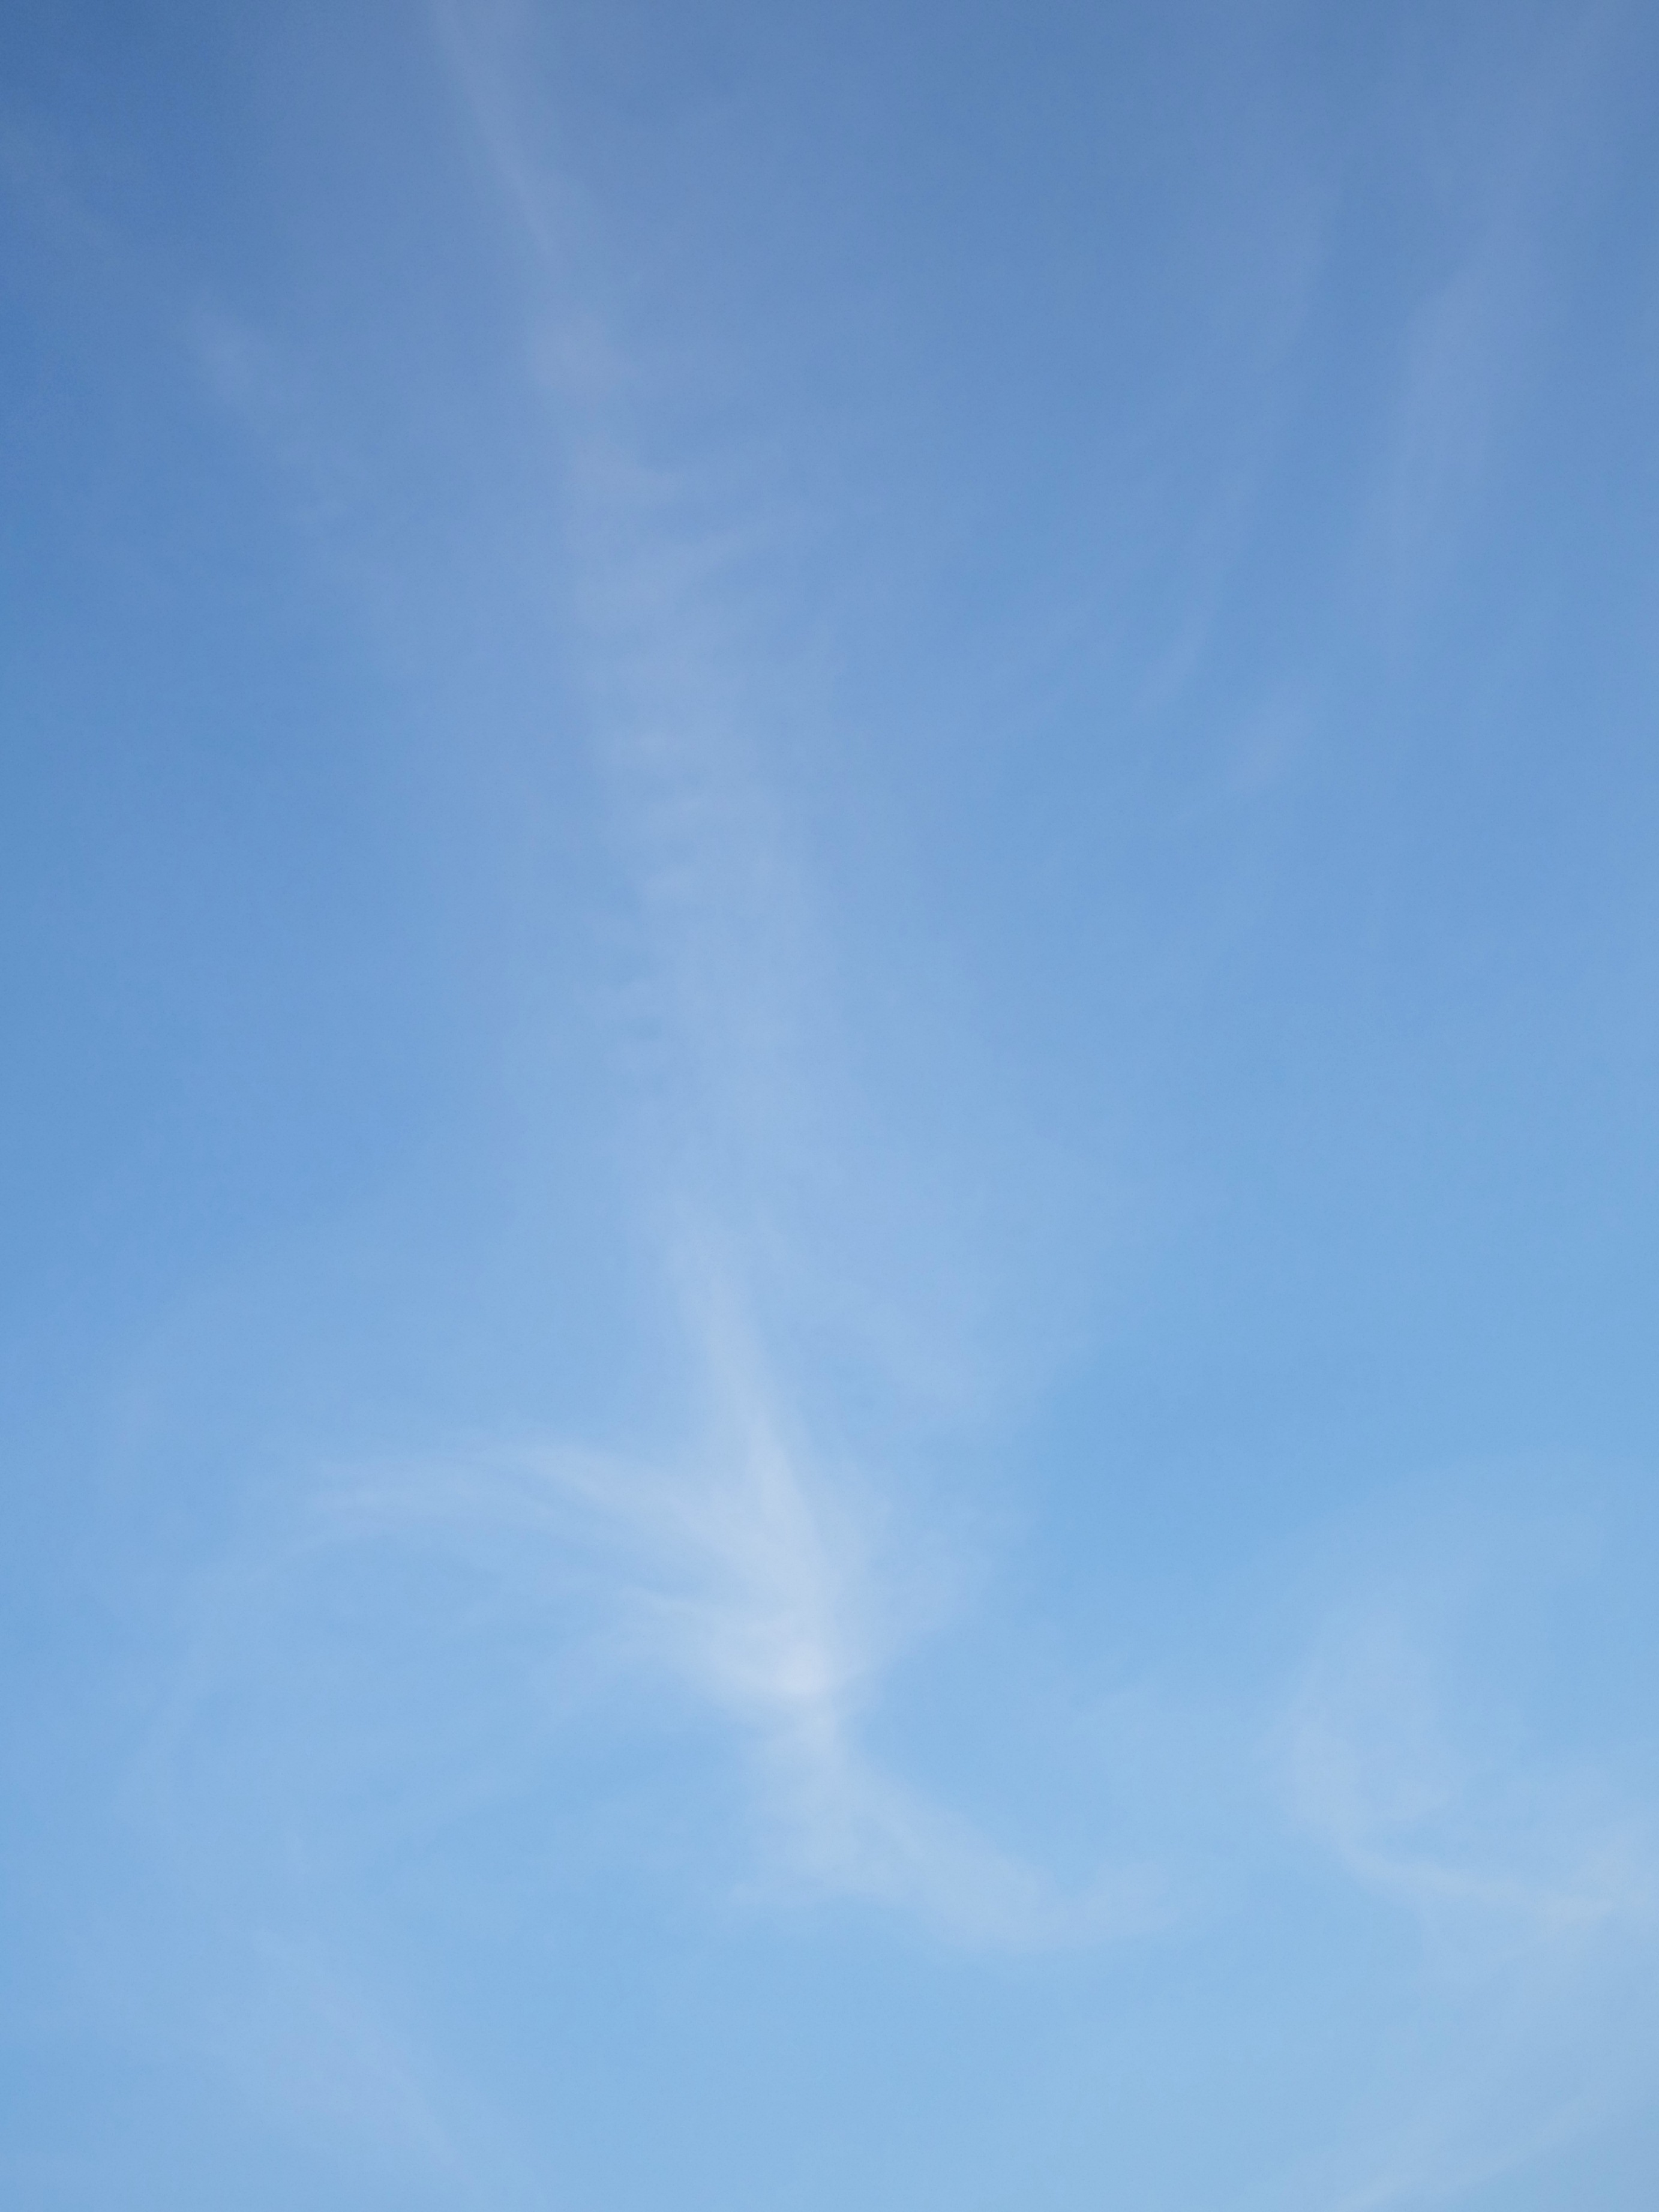 Clouds in the blue sky photo